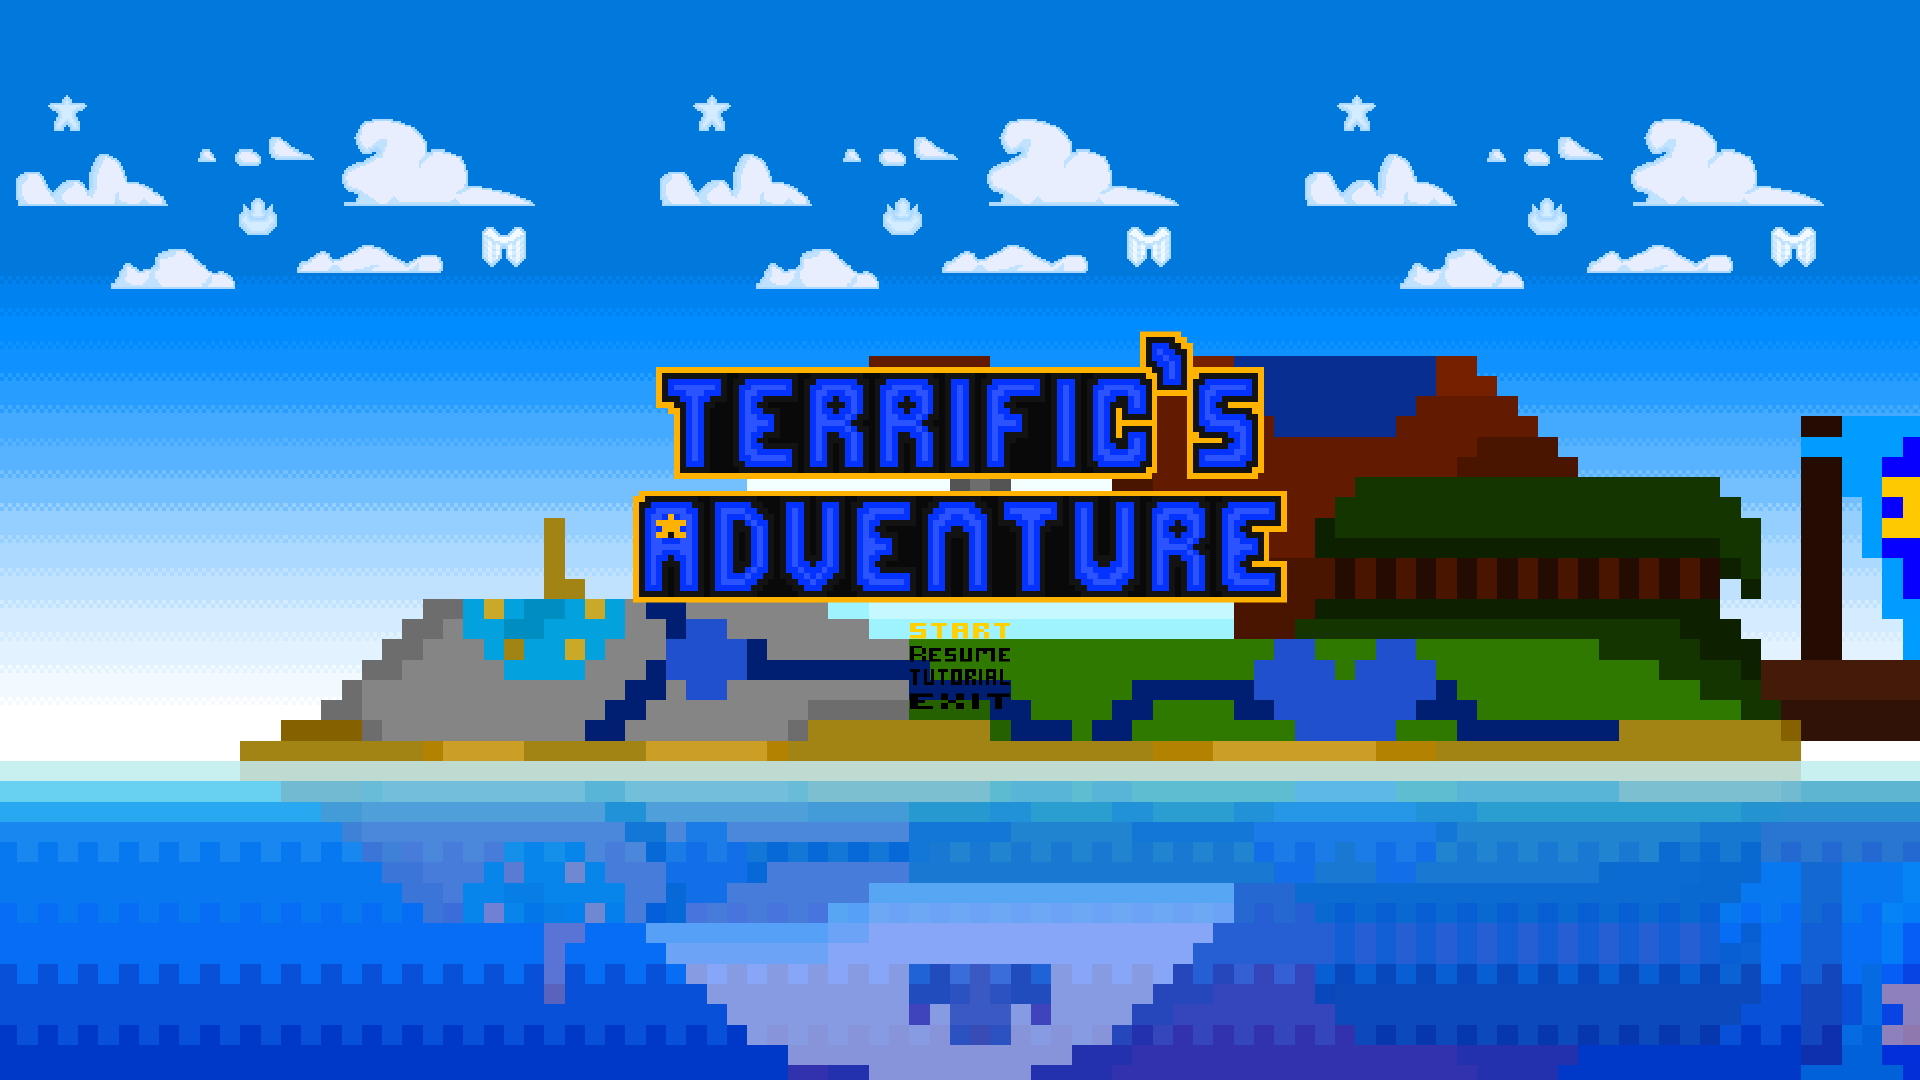 Terrific's Adventure